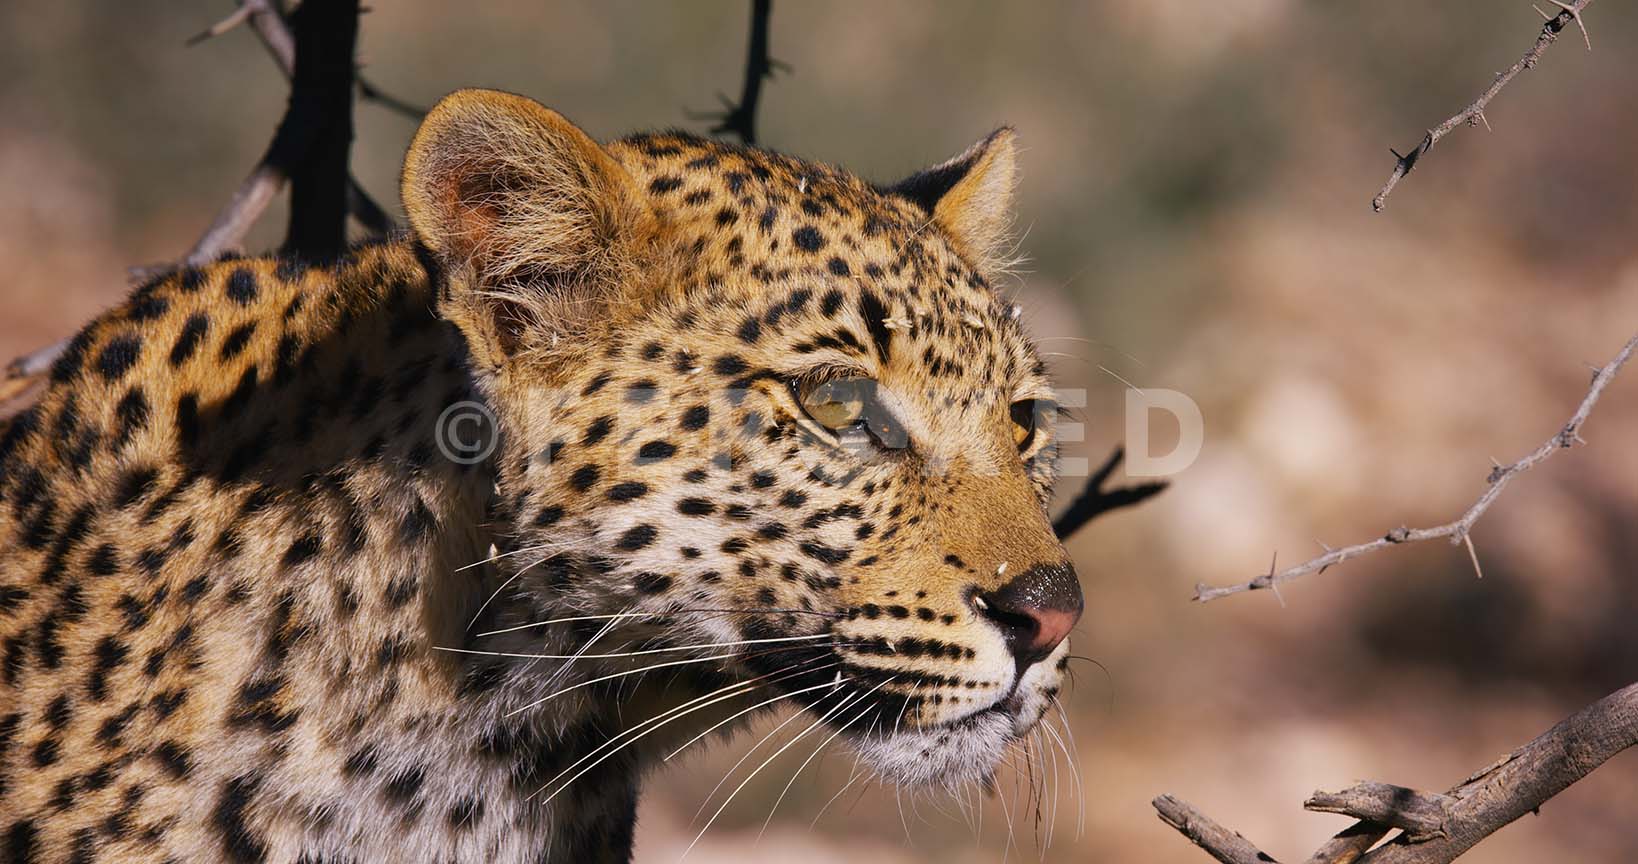 Leopard Kgahagadi 2018_1.44.1.jpg